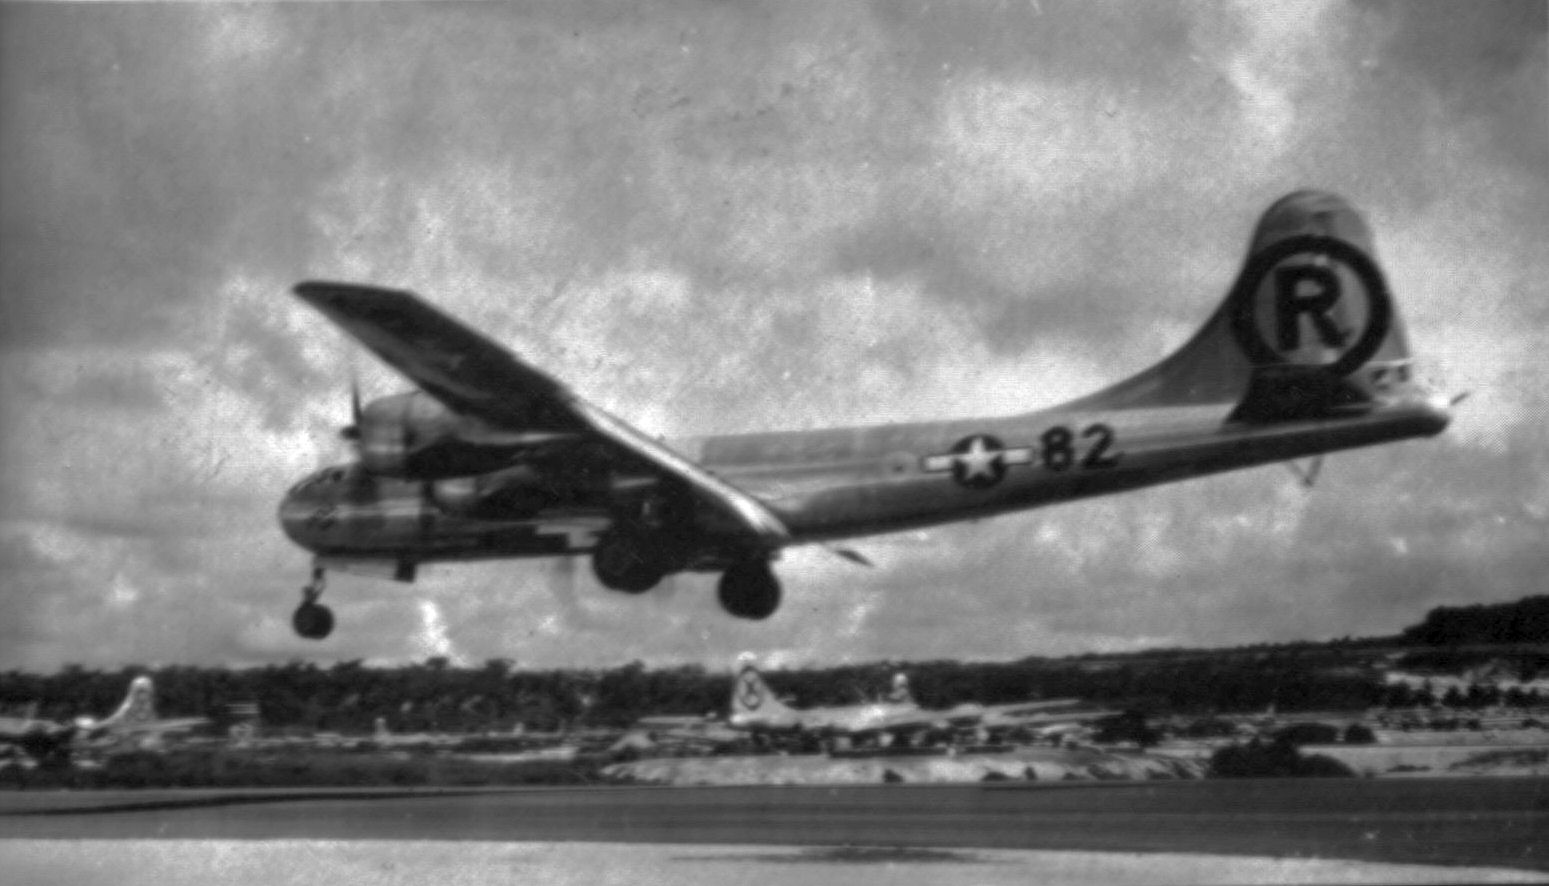 Hiroshima Japan Enola Gay Crew B-29 Bomber PHOTO,Dropped Atomic Bomb Little Boy